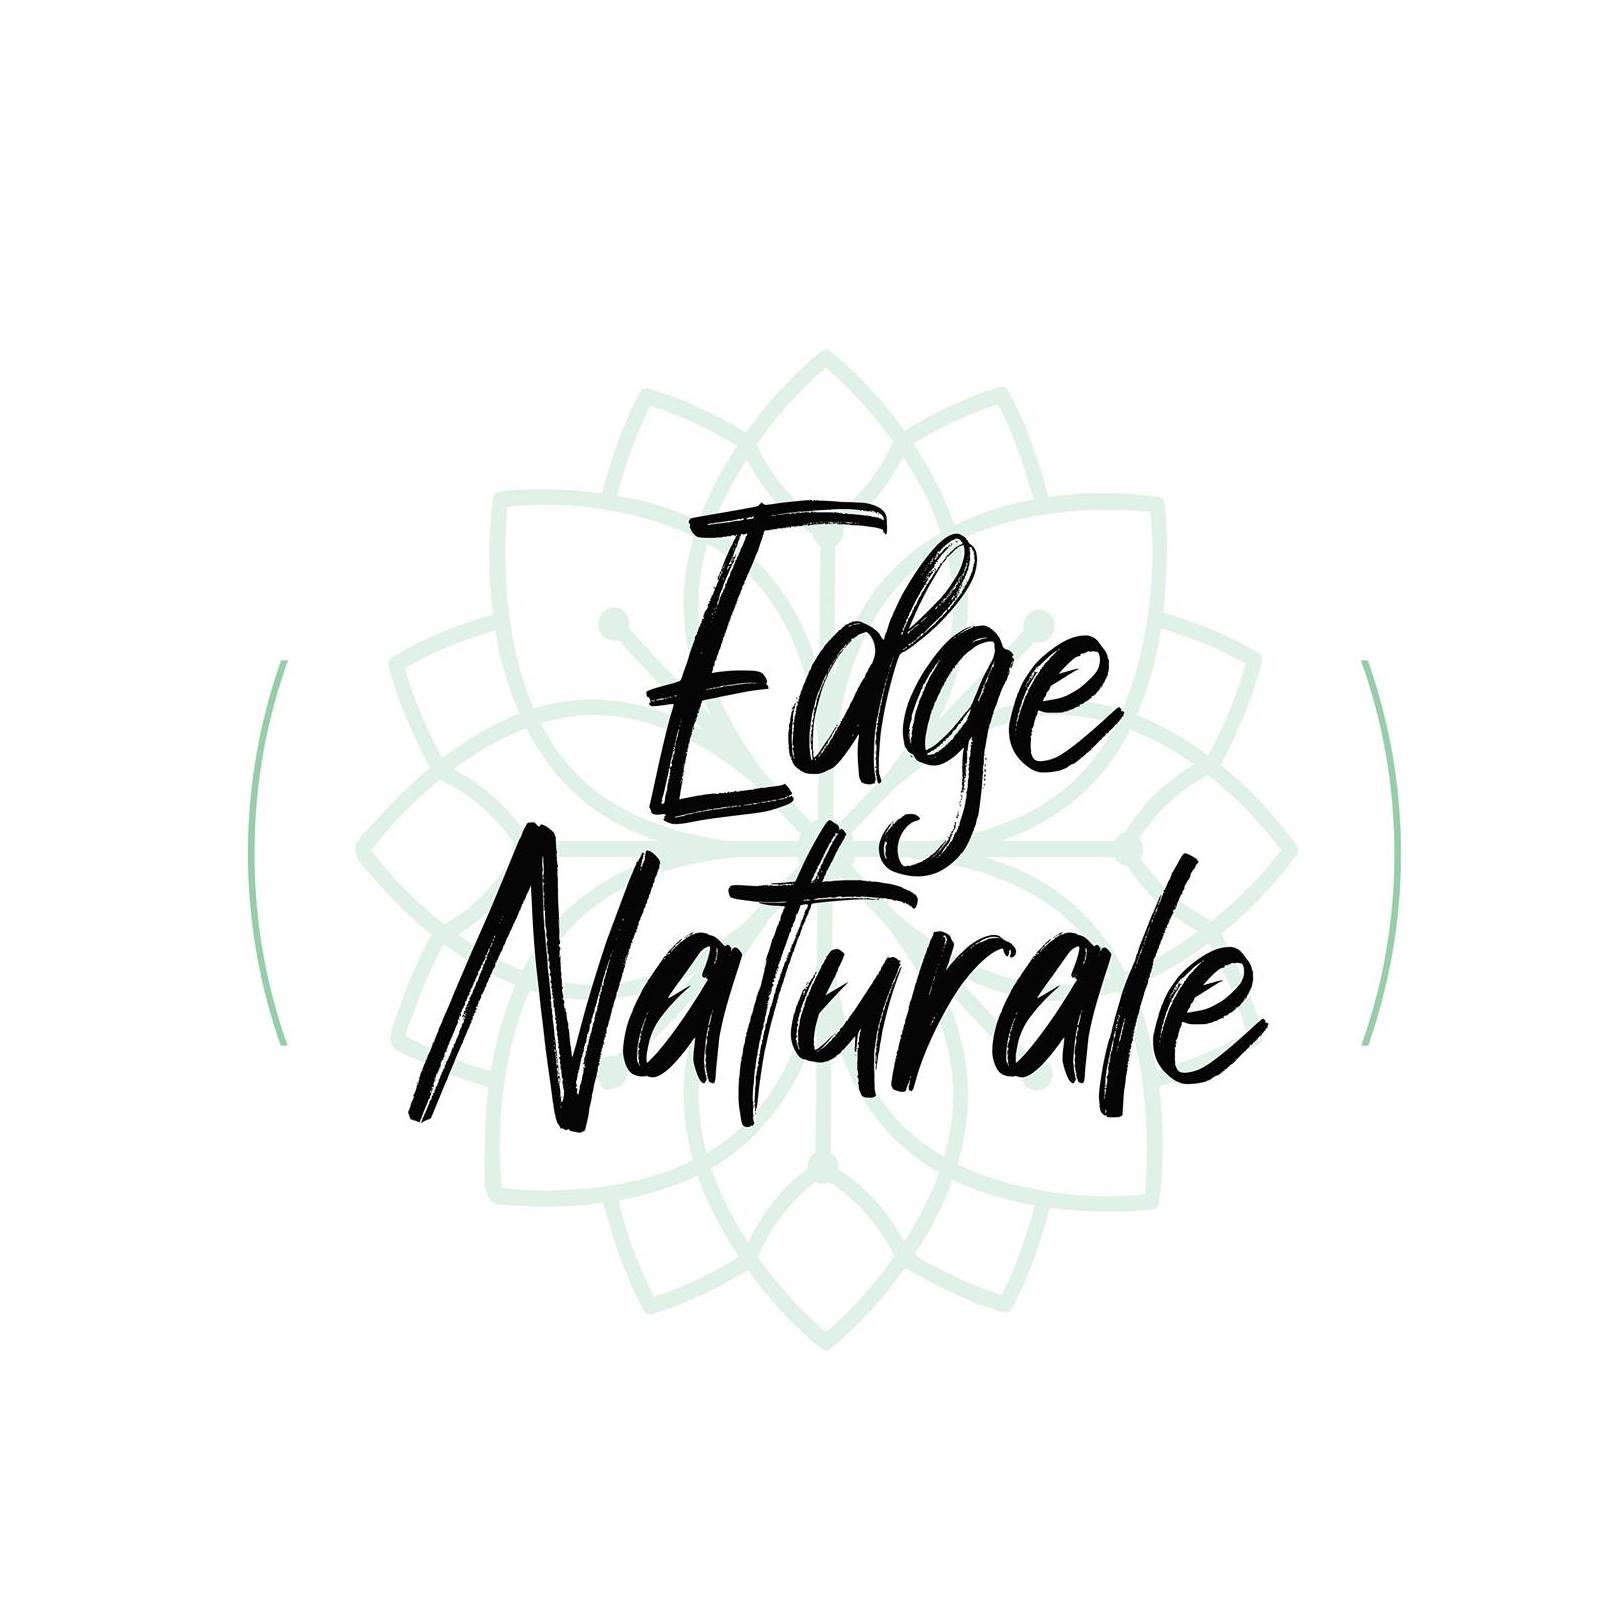 Edge Naturale Edge Naturale